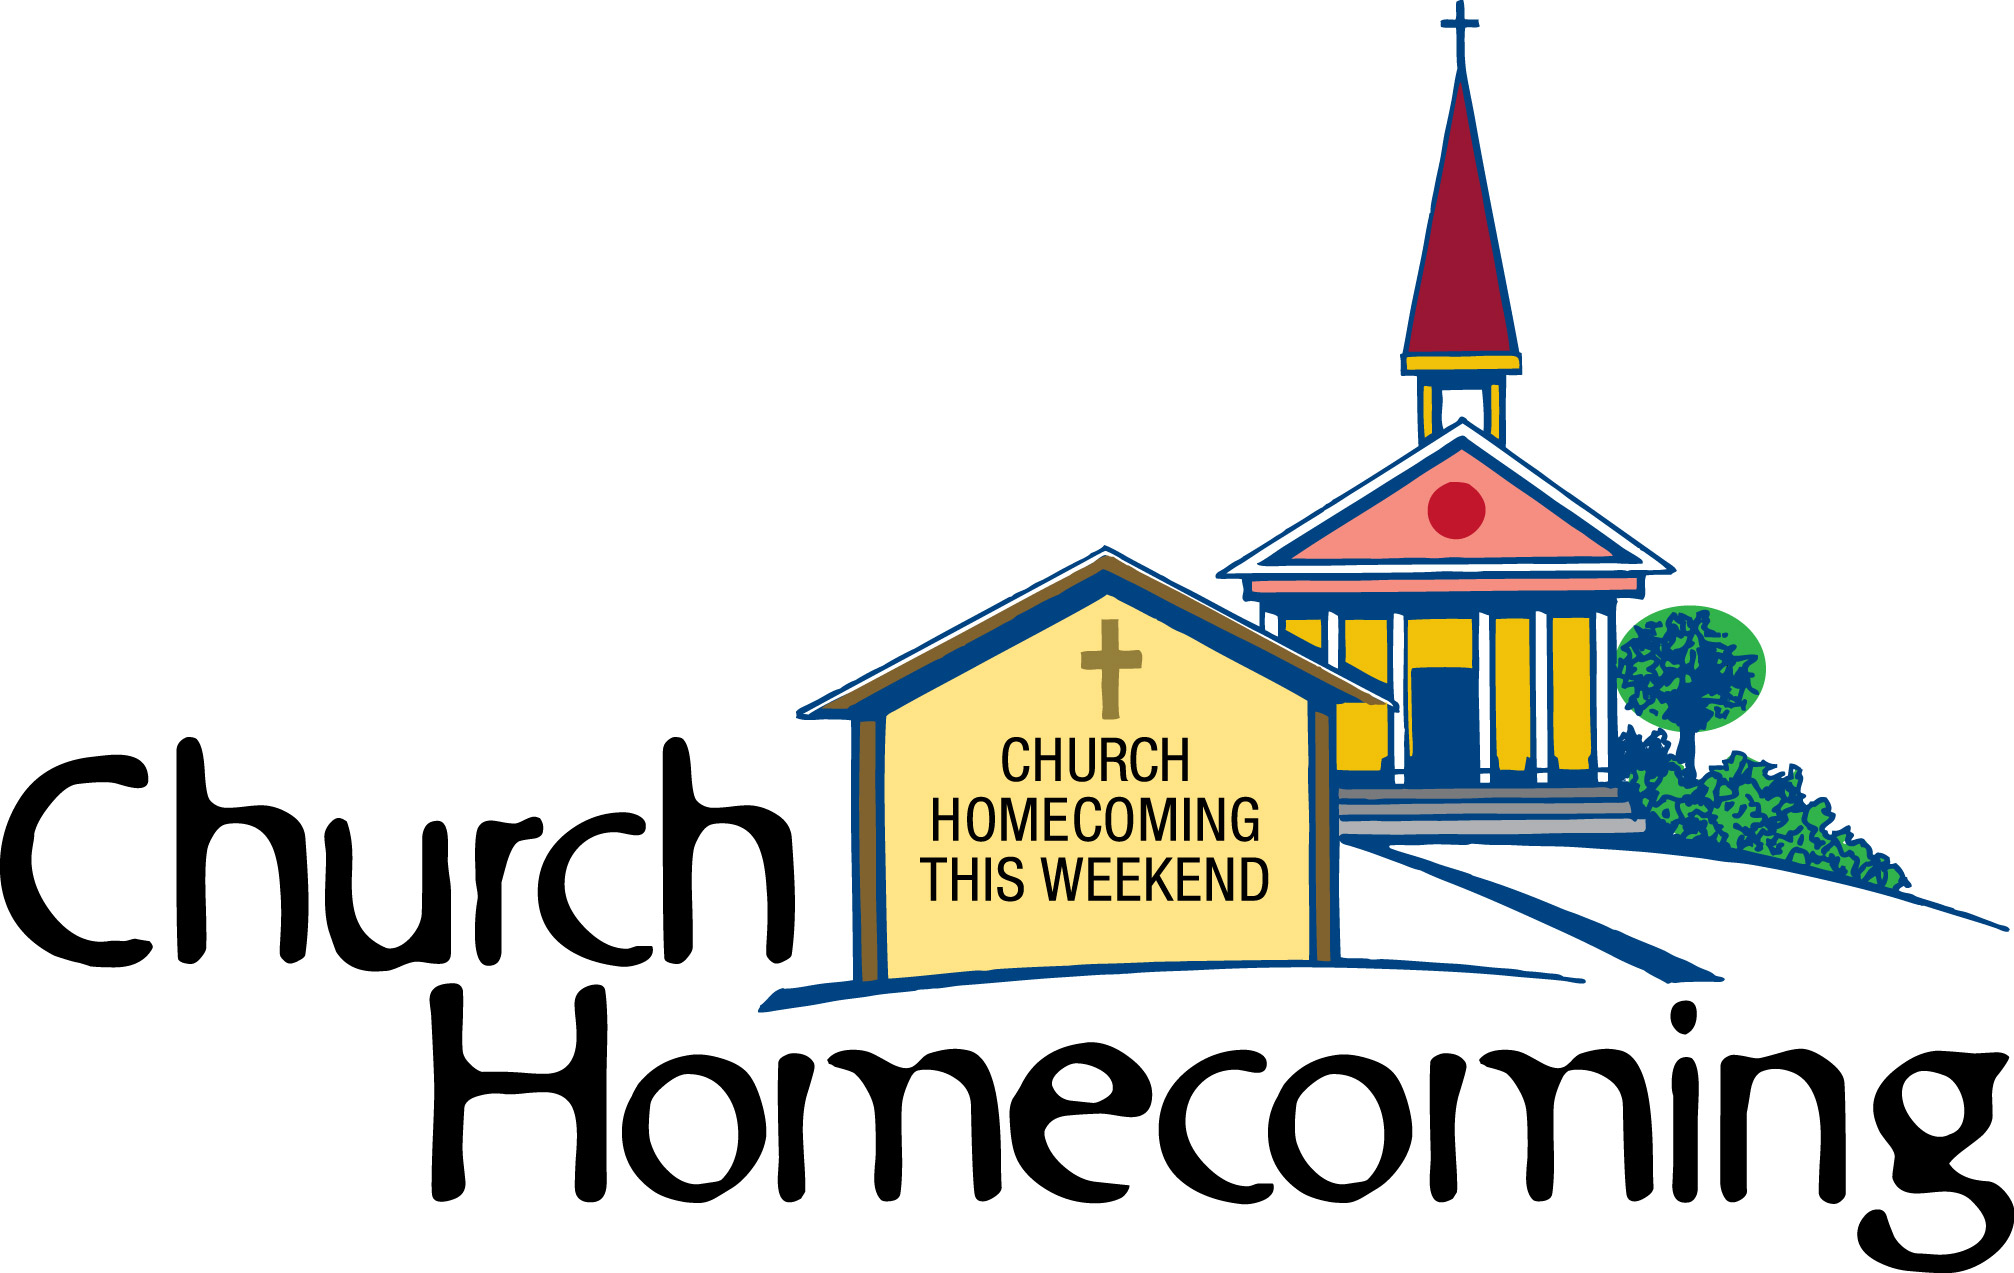 Church homecoming clipart jpg - Clipartix